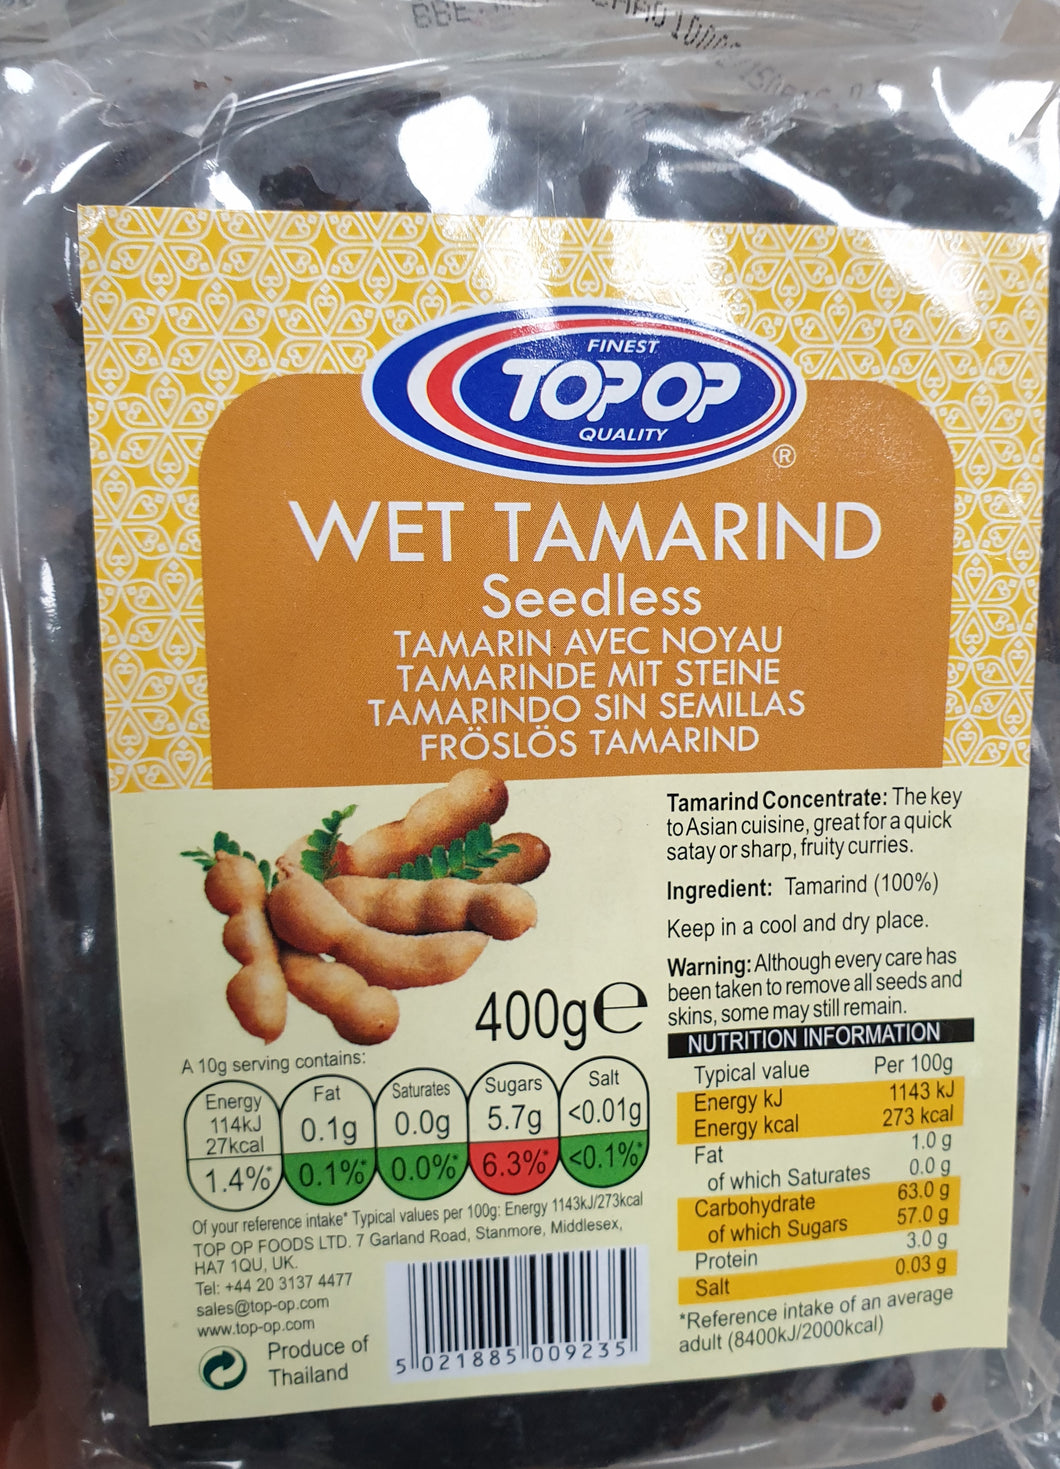 Wet Tamarind Seedless IMLI 400g